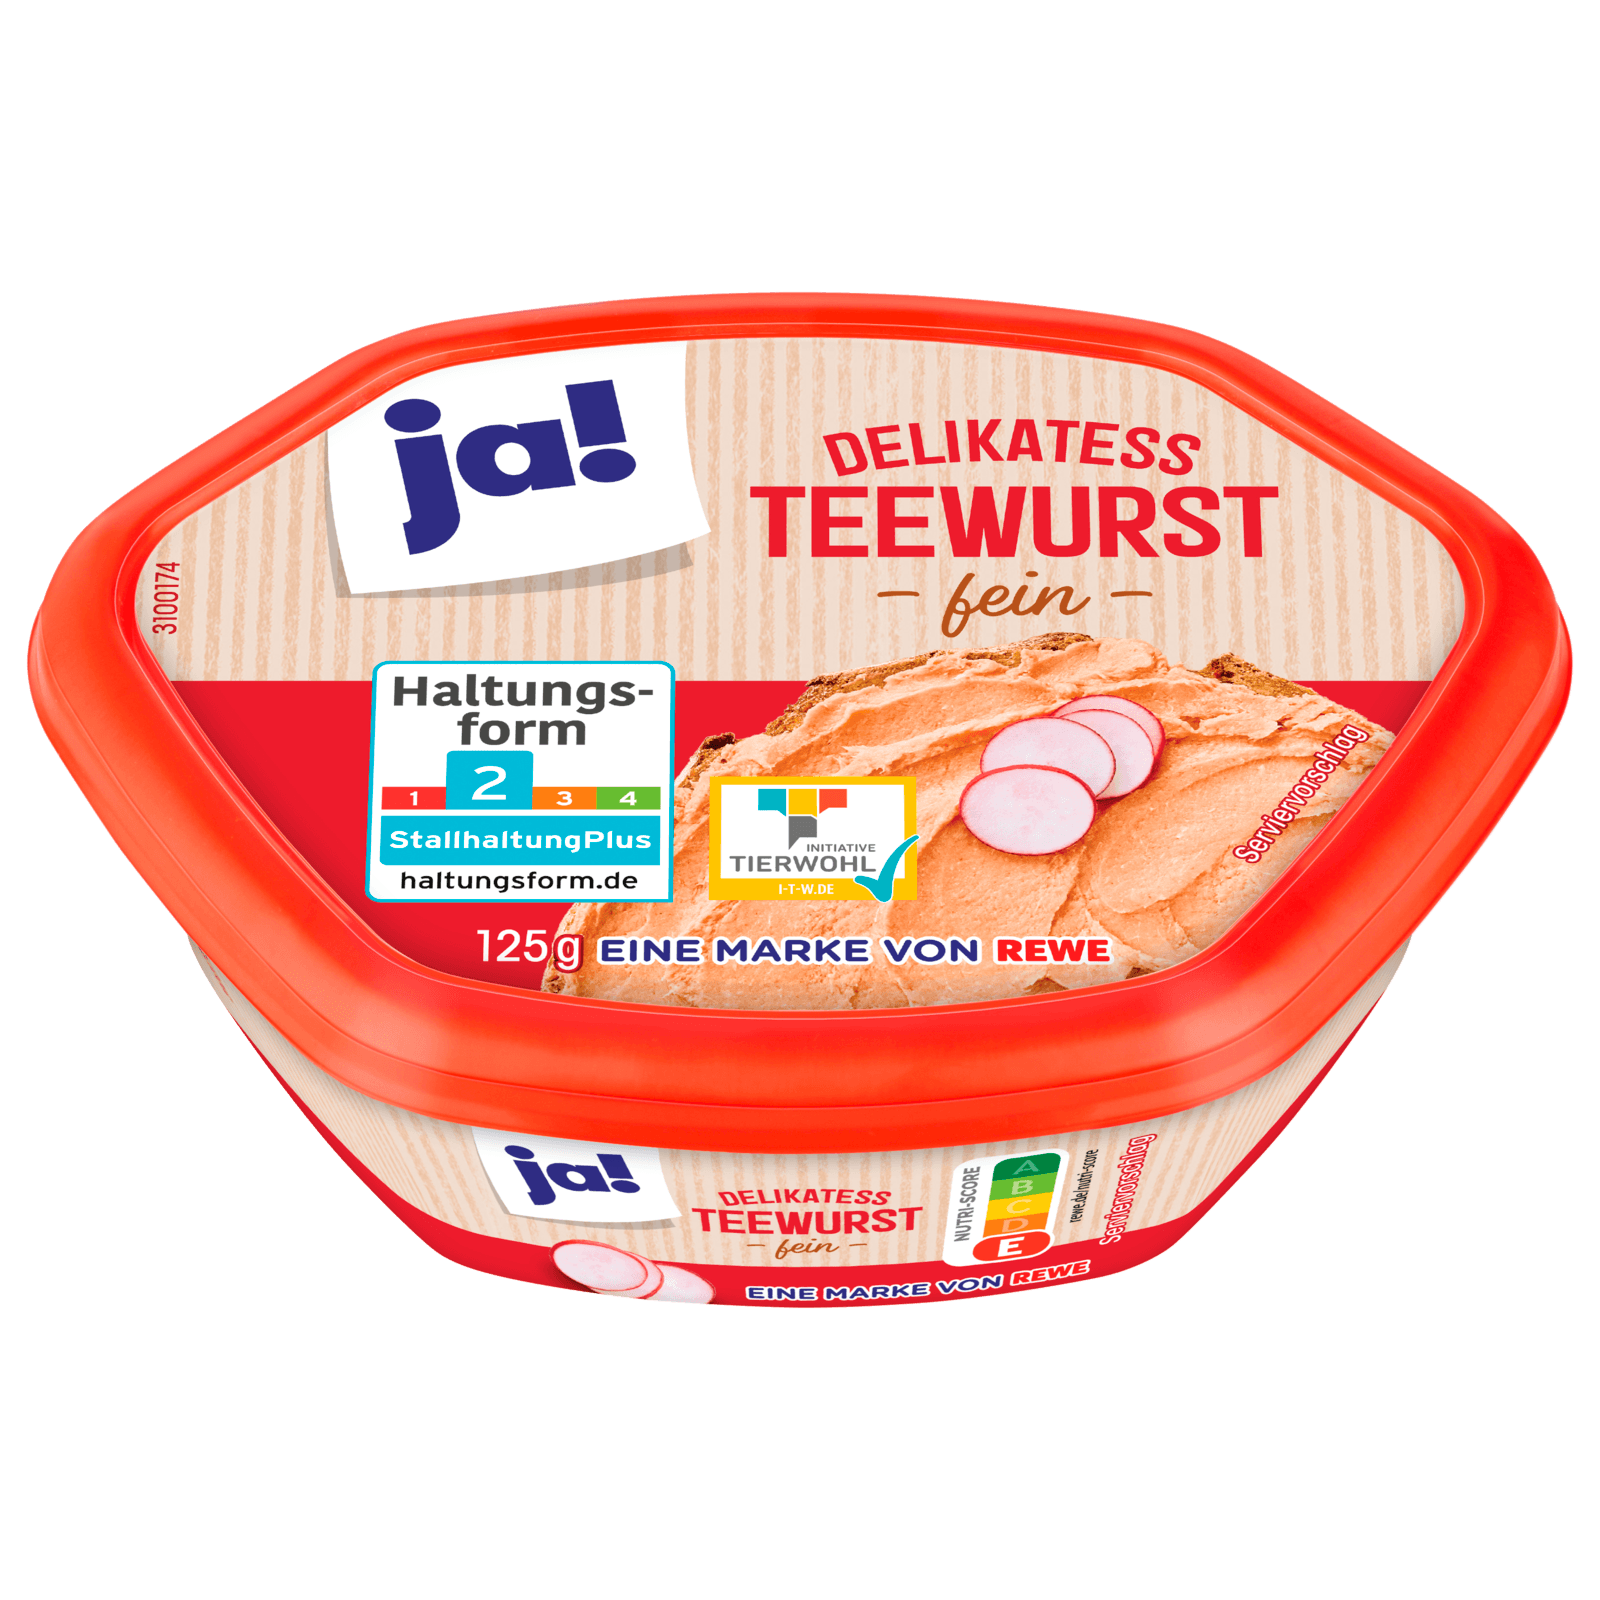 ja! Delikatess Teewurst fein 125g bei REWE online bestellen!